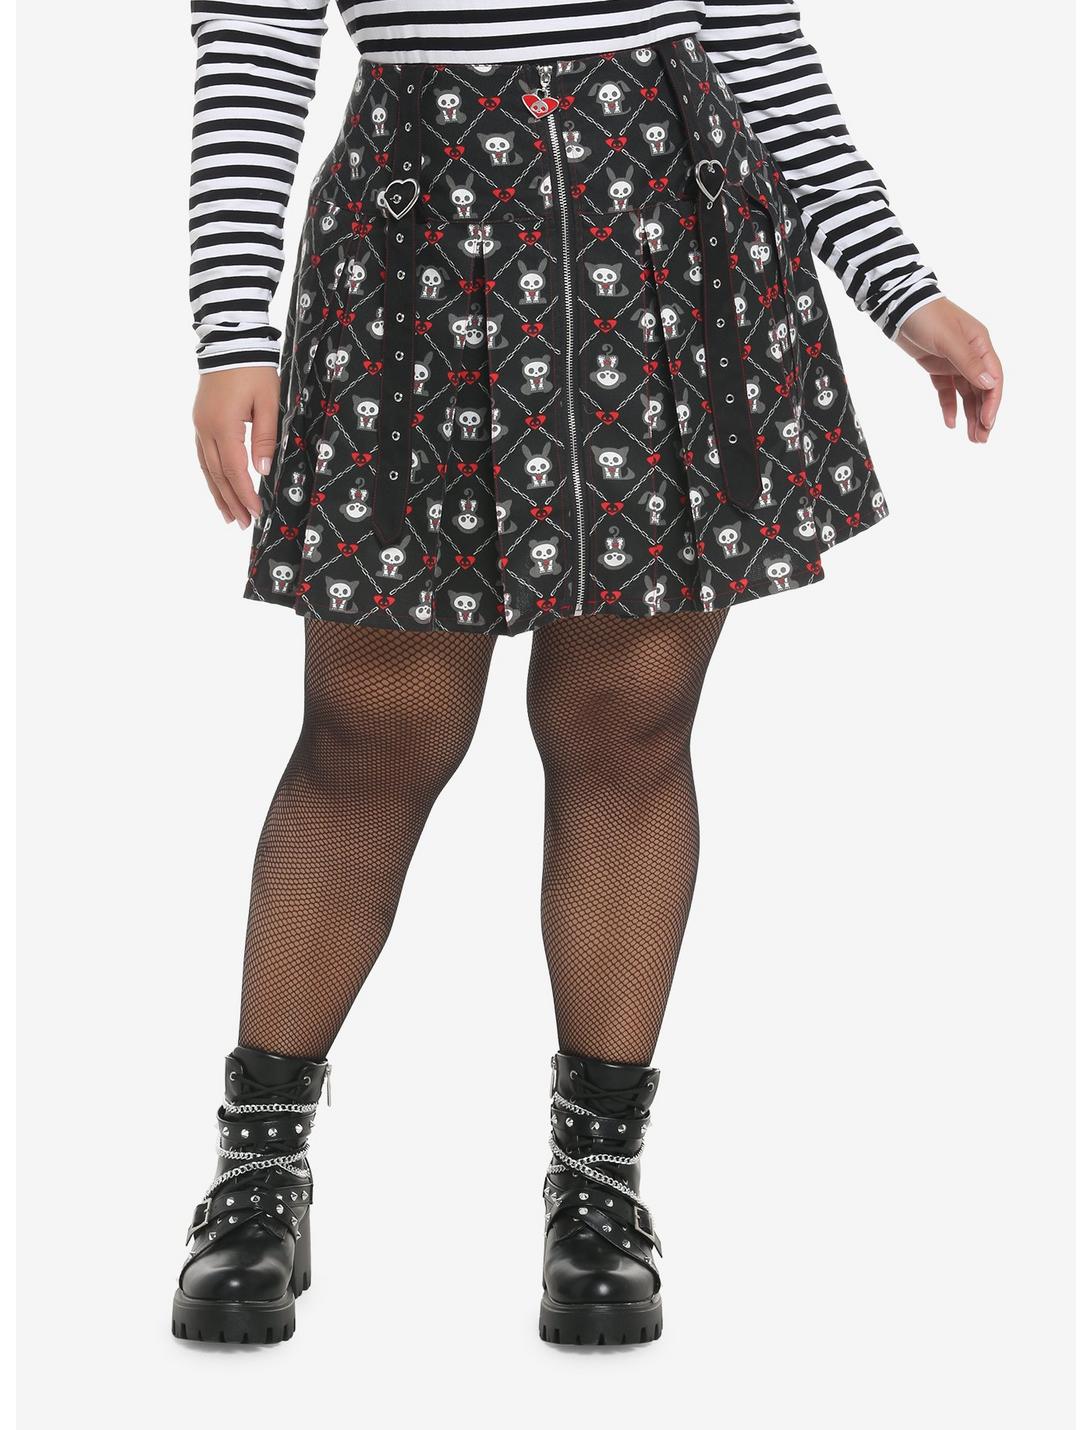 Skelanimals Grommet Strap Pleated Skirt Plus Size, MULTI, hi-res